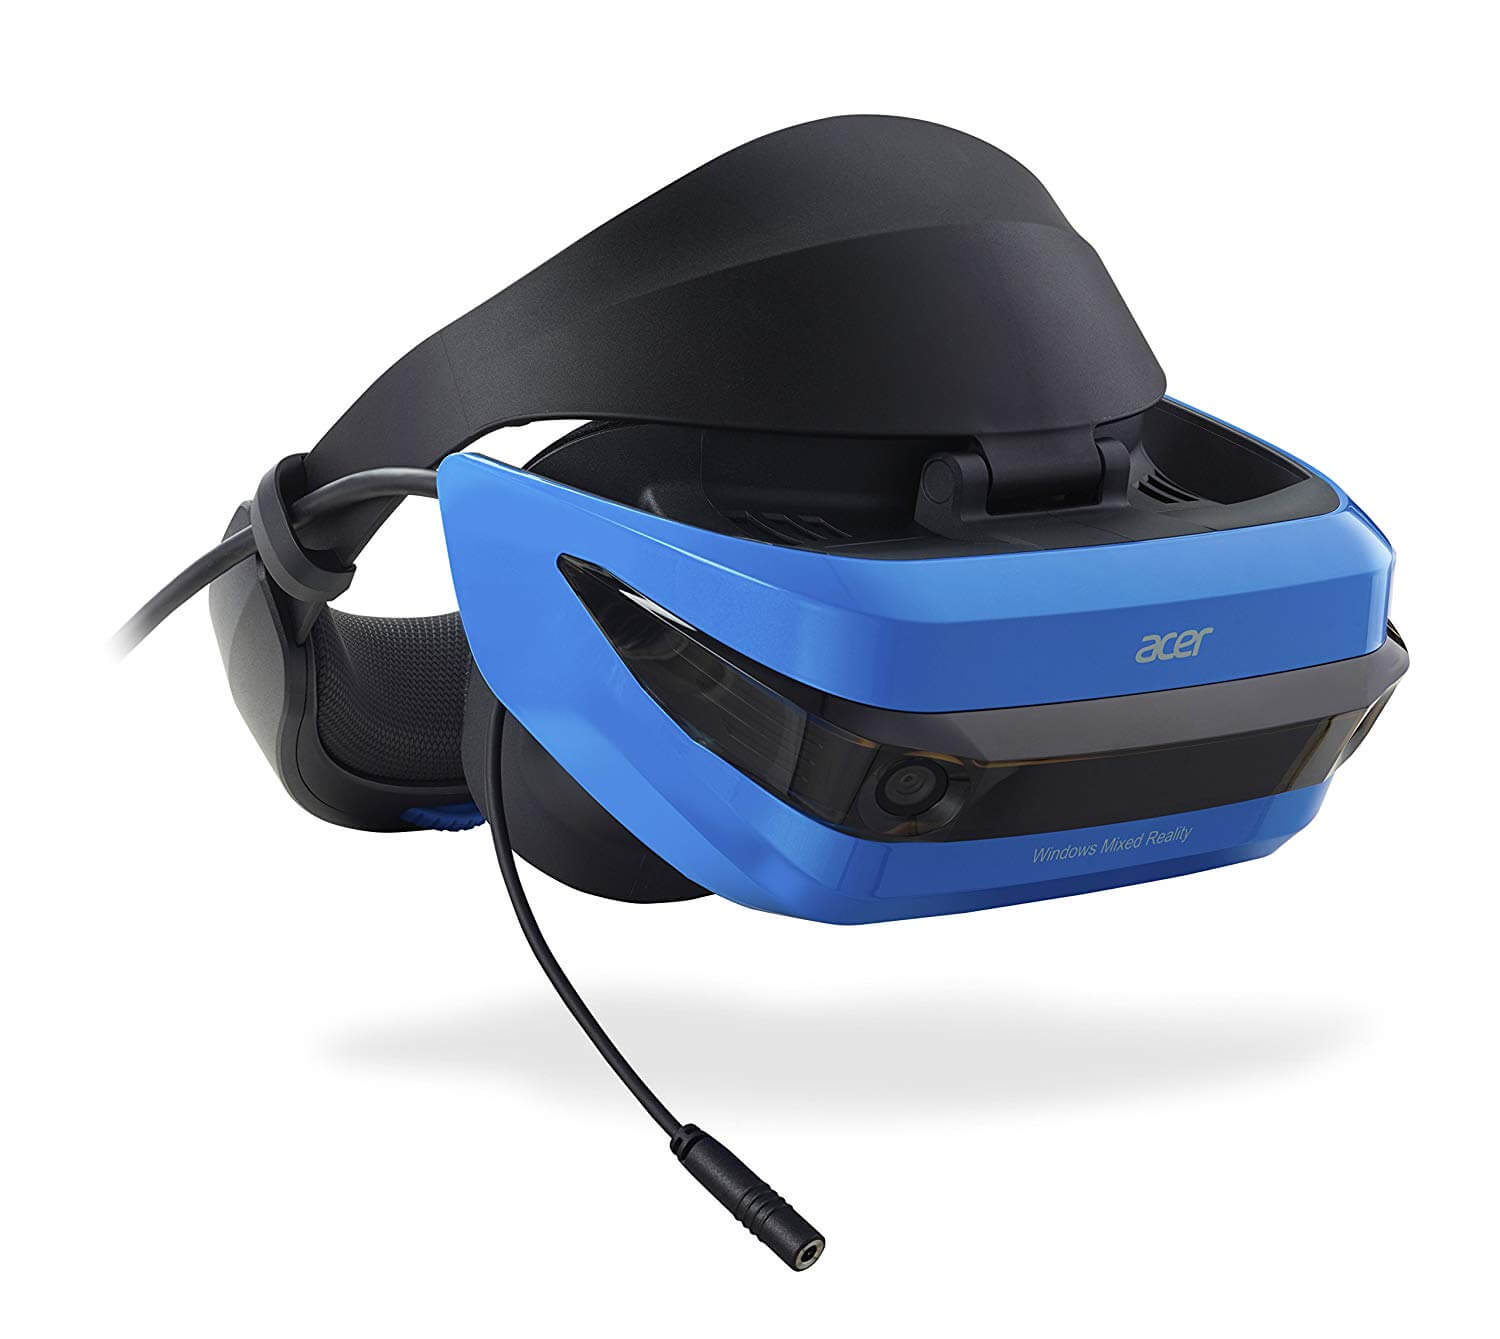 Best VR Gaming Headset